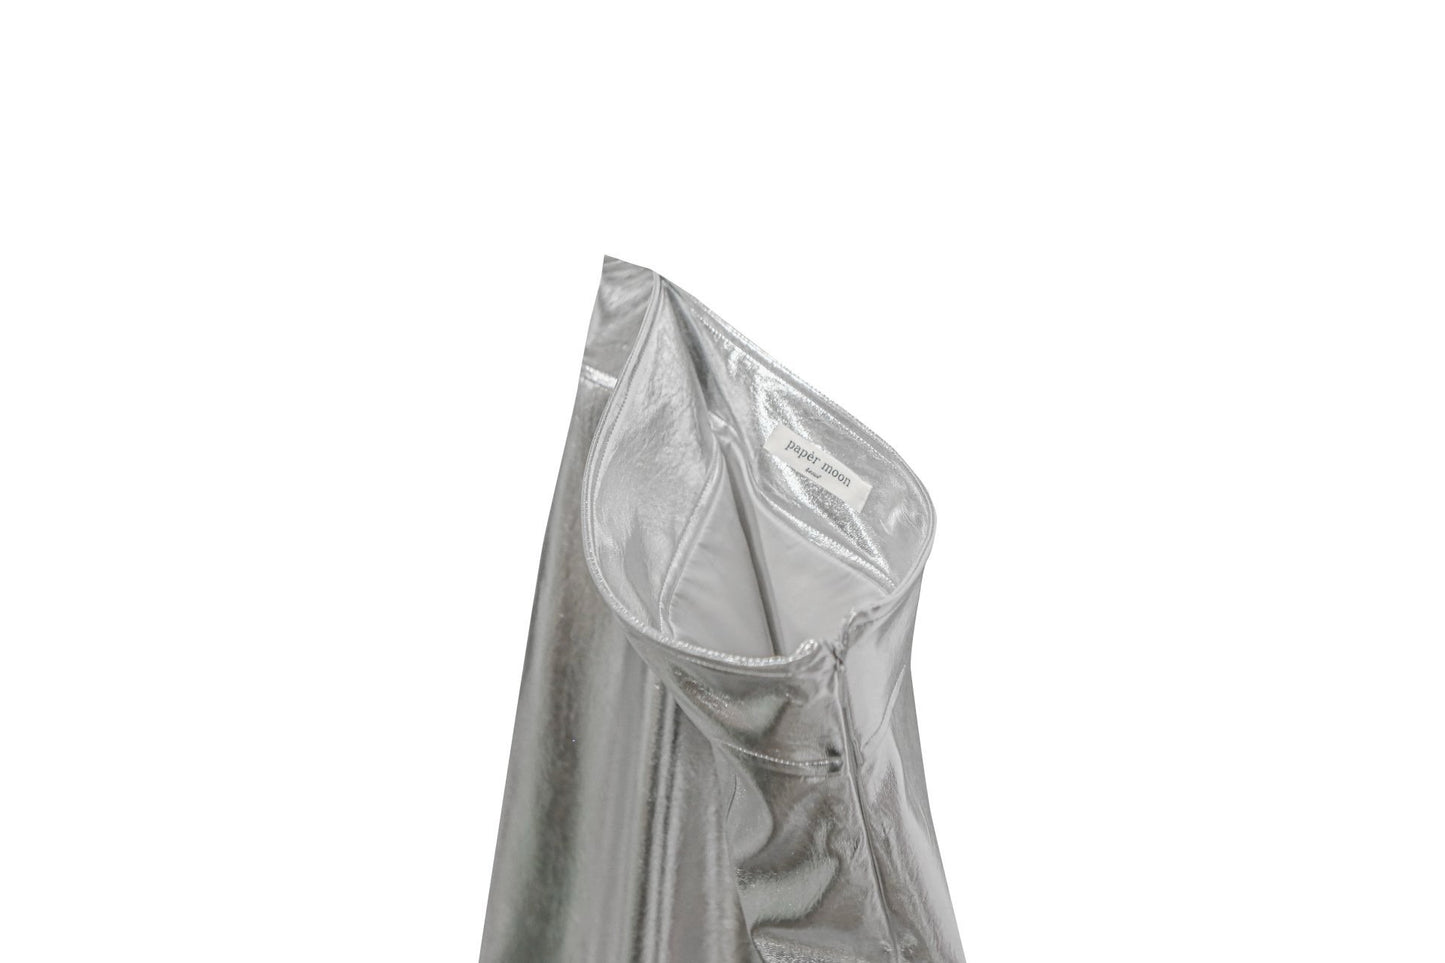 [PAPERMOON] SS / Metallic Leather Slit Detail Pencil Skirt